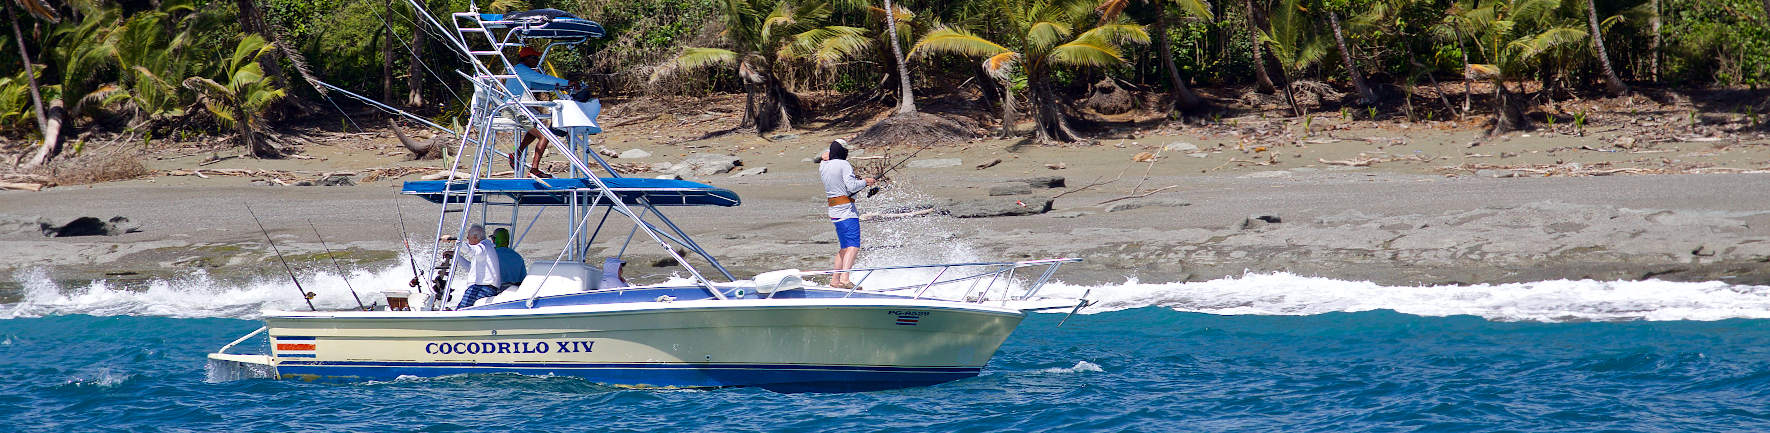 Sport fishing in Costa Rica | Aqua-Aston Hotels